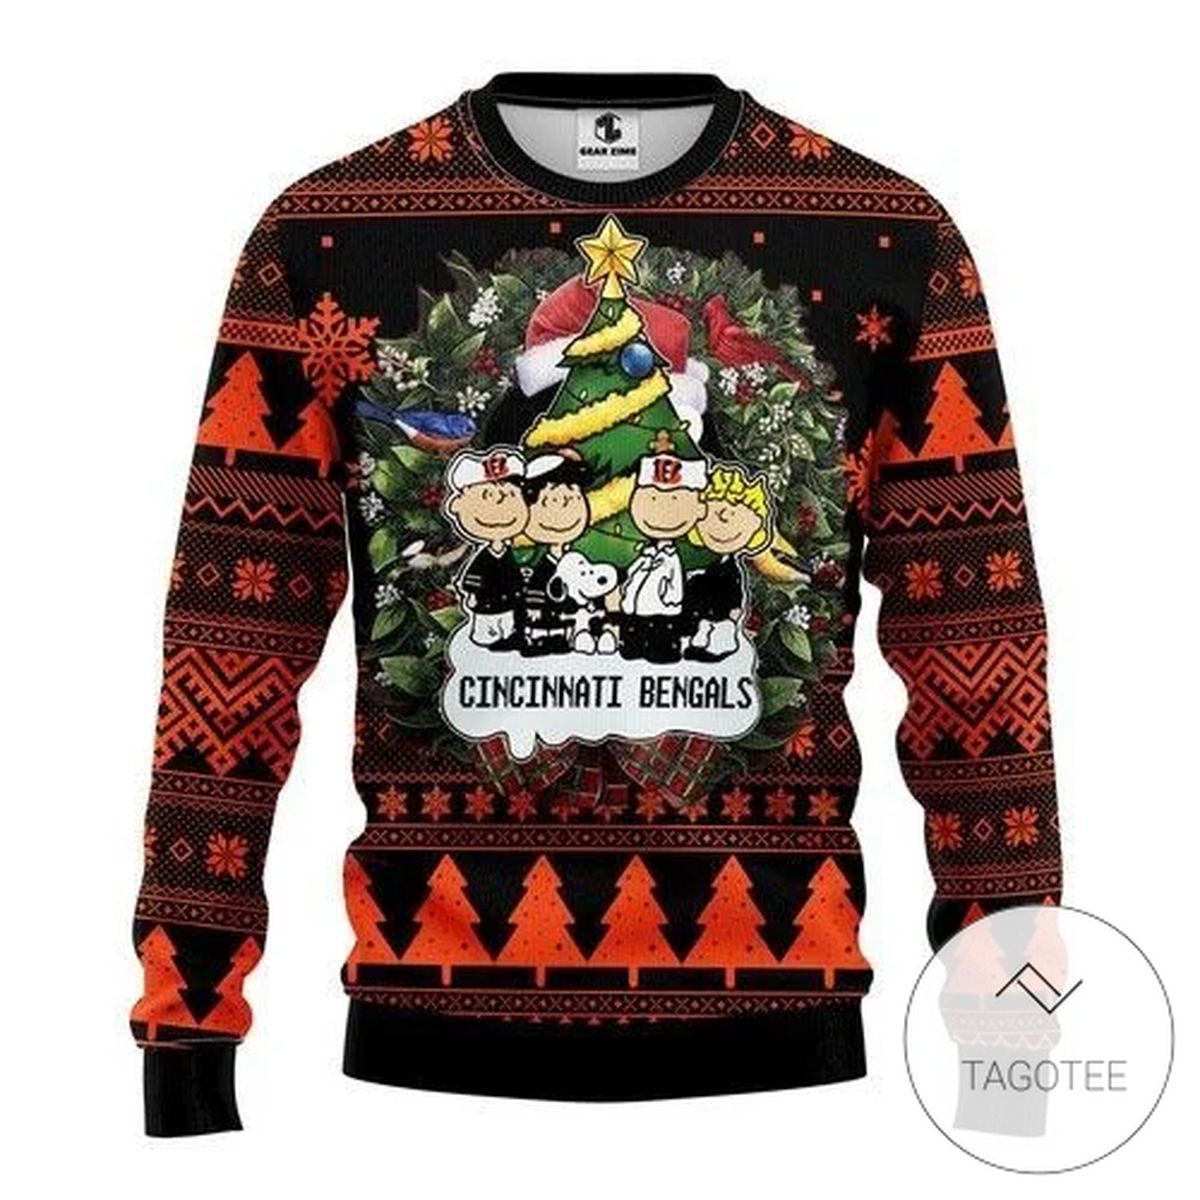 Cincinnati Bengals Sweatshirt Knitted Ugly Christmas Sweater